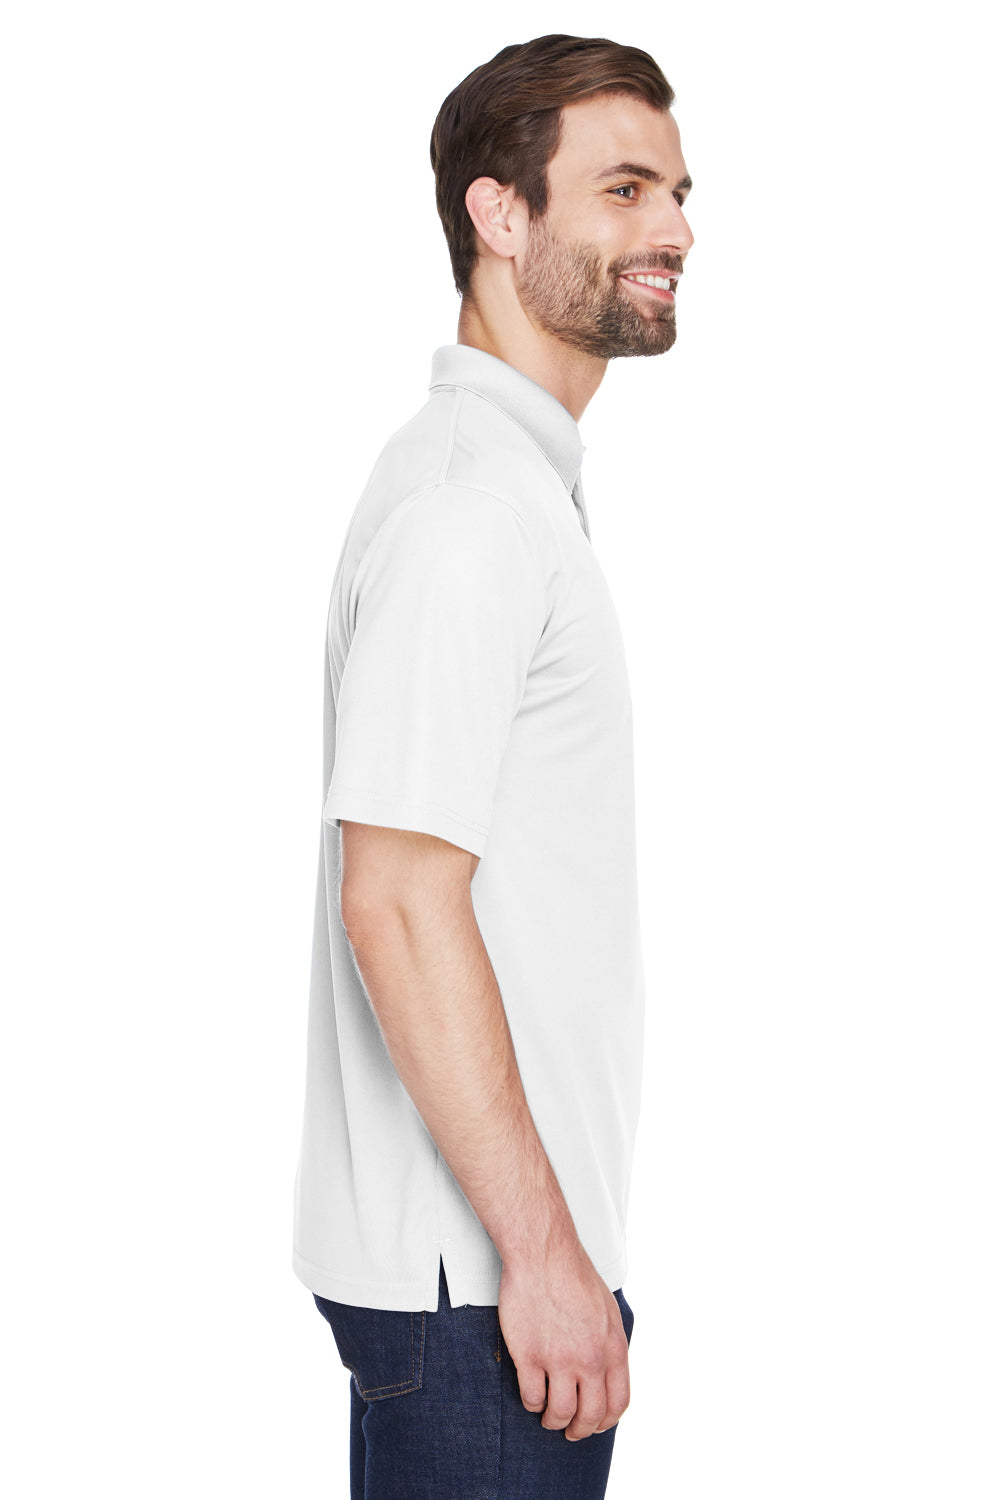 UltraClub 8210 Mens Cool & Dry Moisture Wicking Short Sleeve Polo Shirt White Side